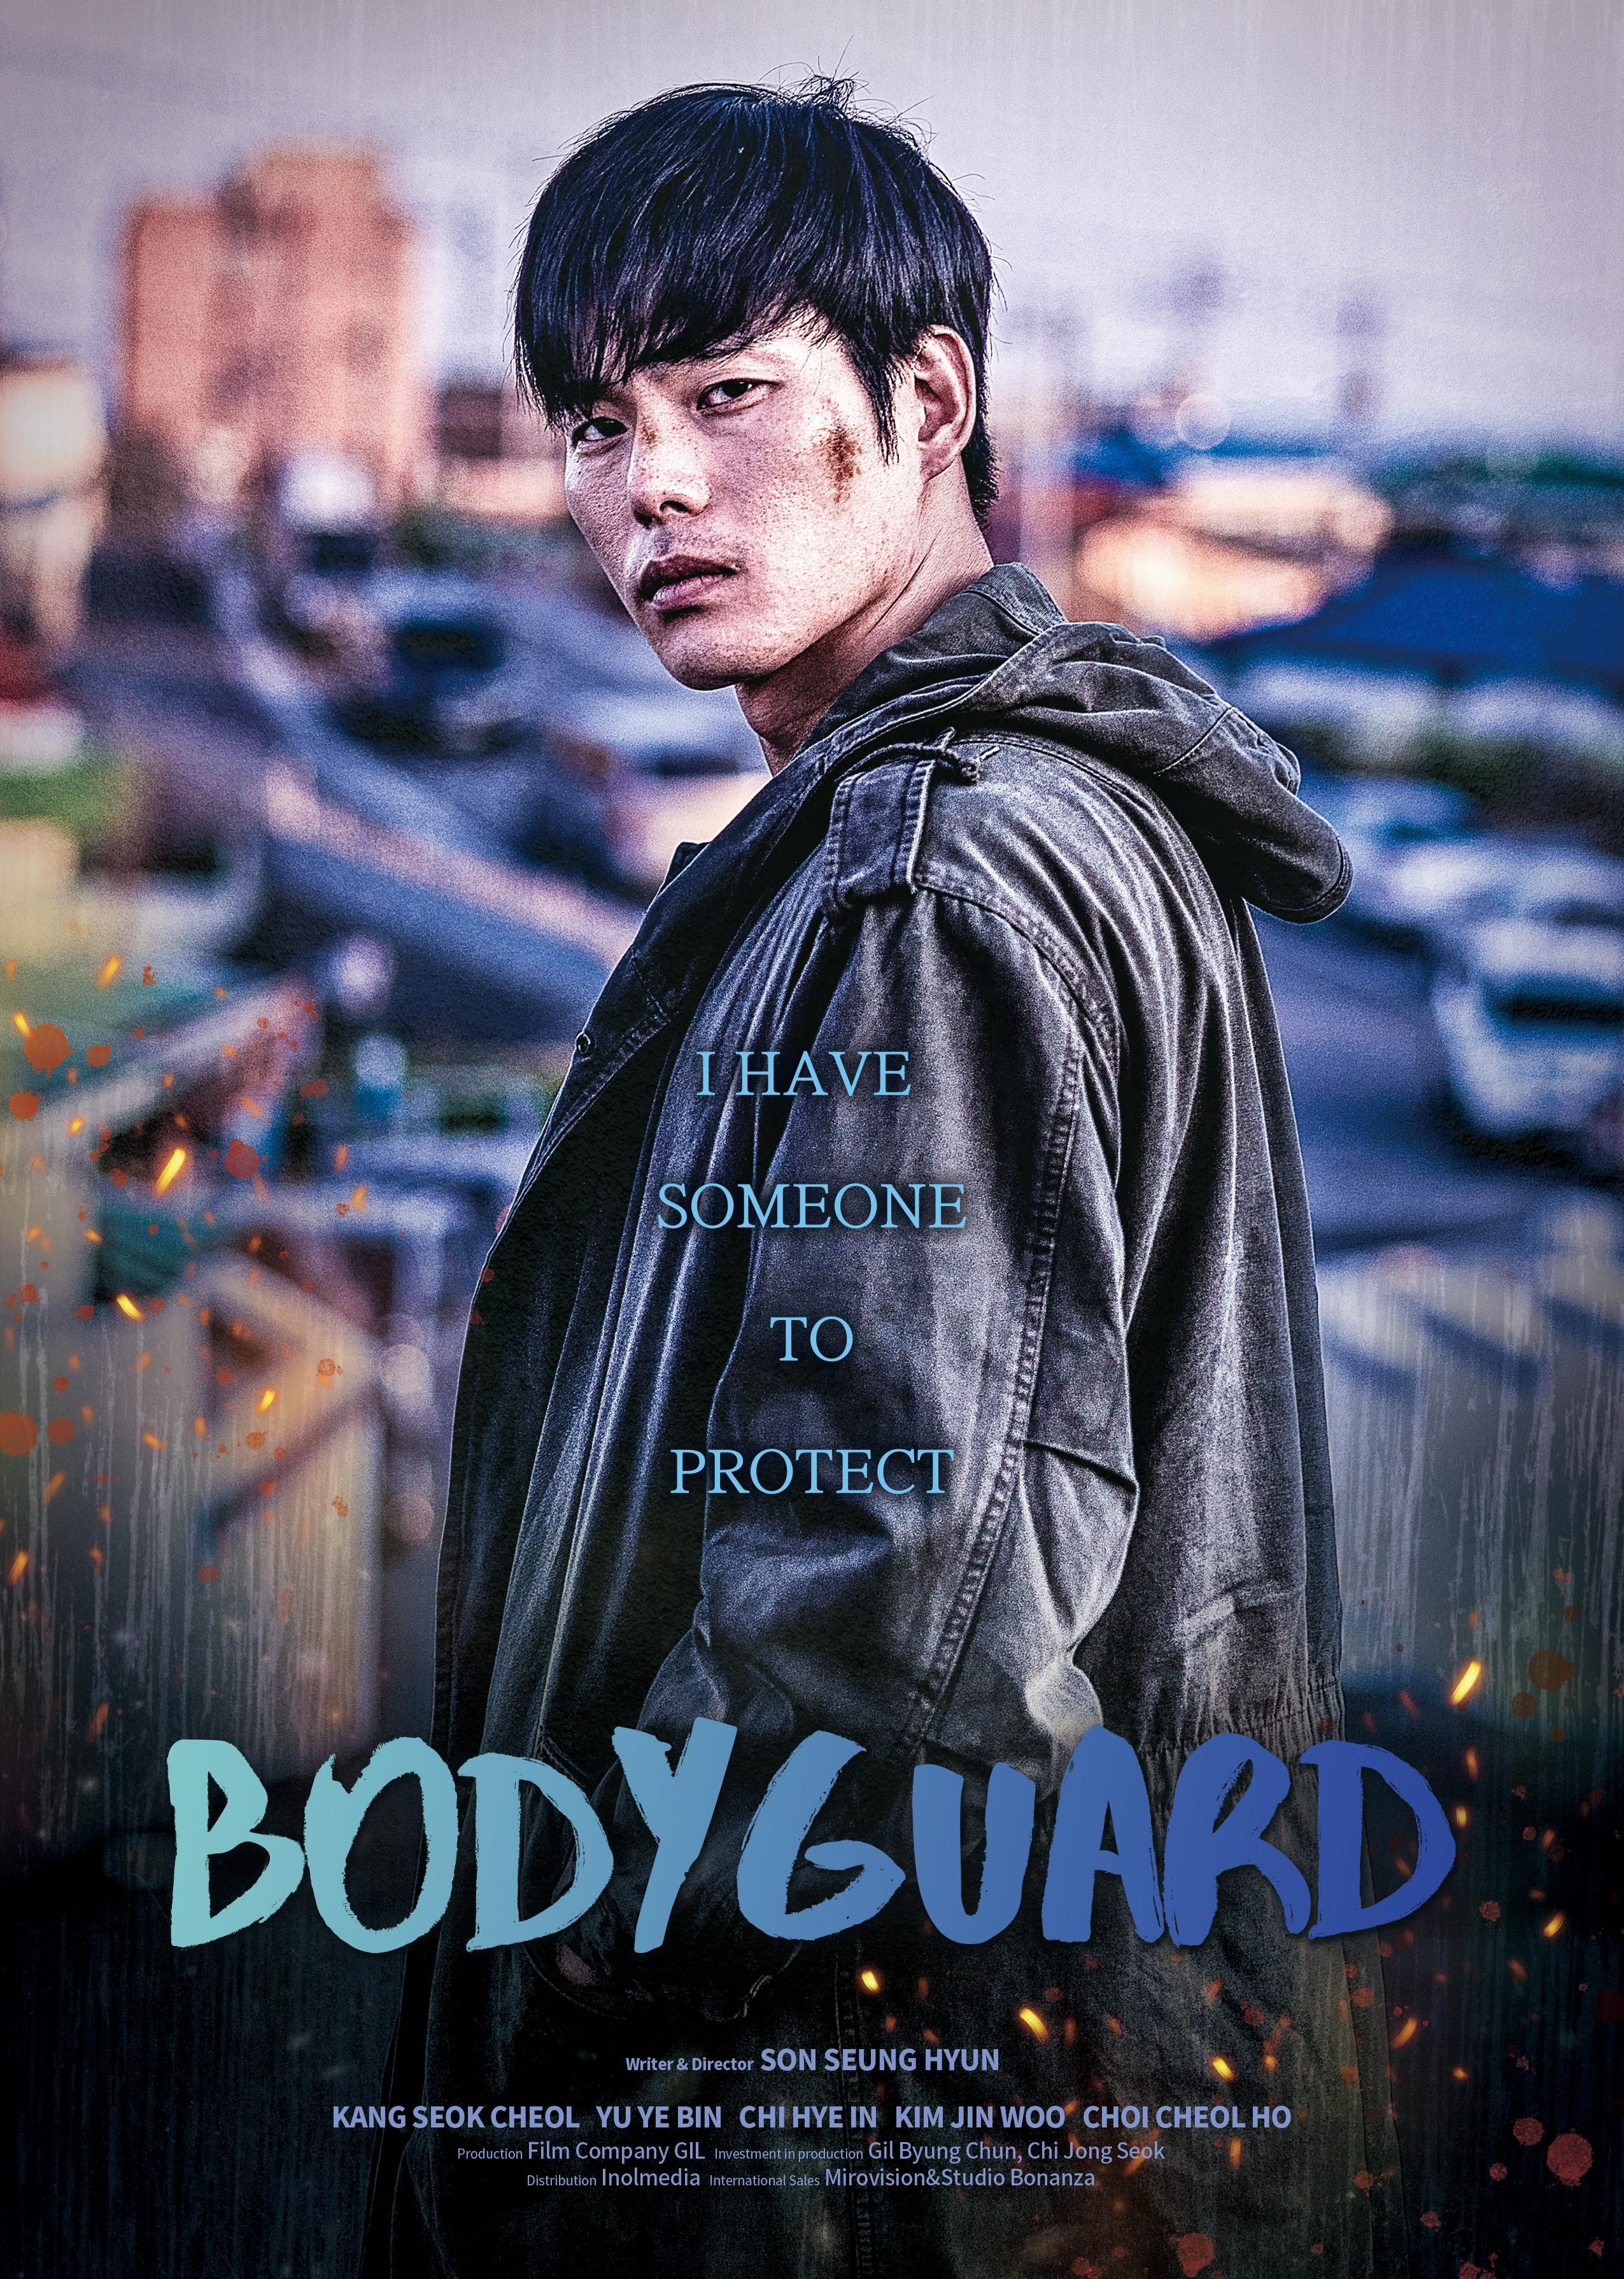 Bodyguard (2020) Hindi Dubbed Full Movie